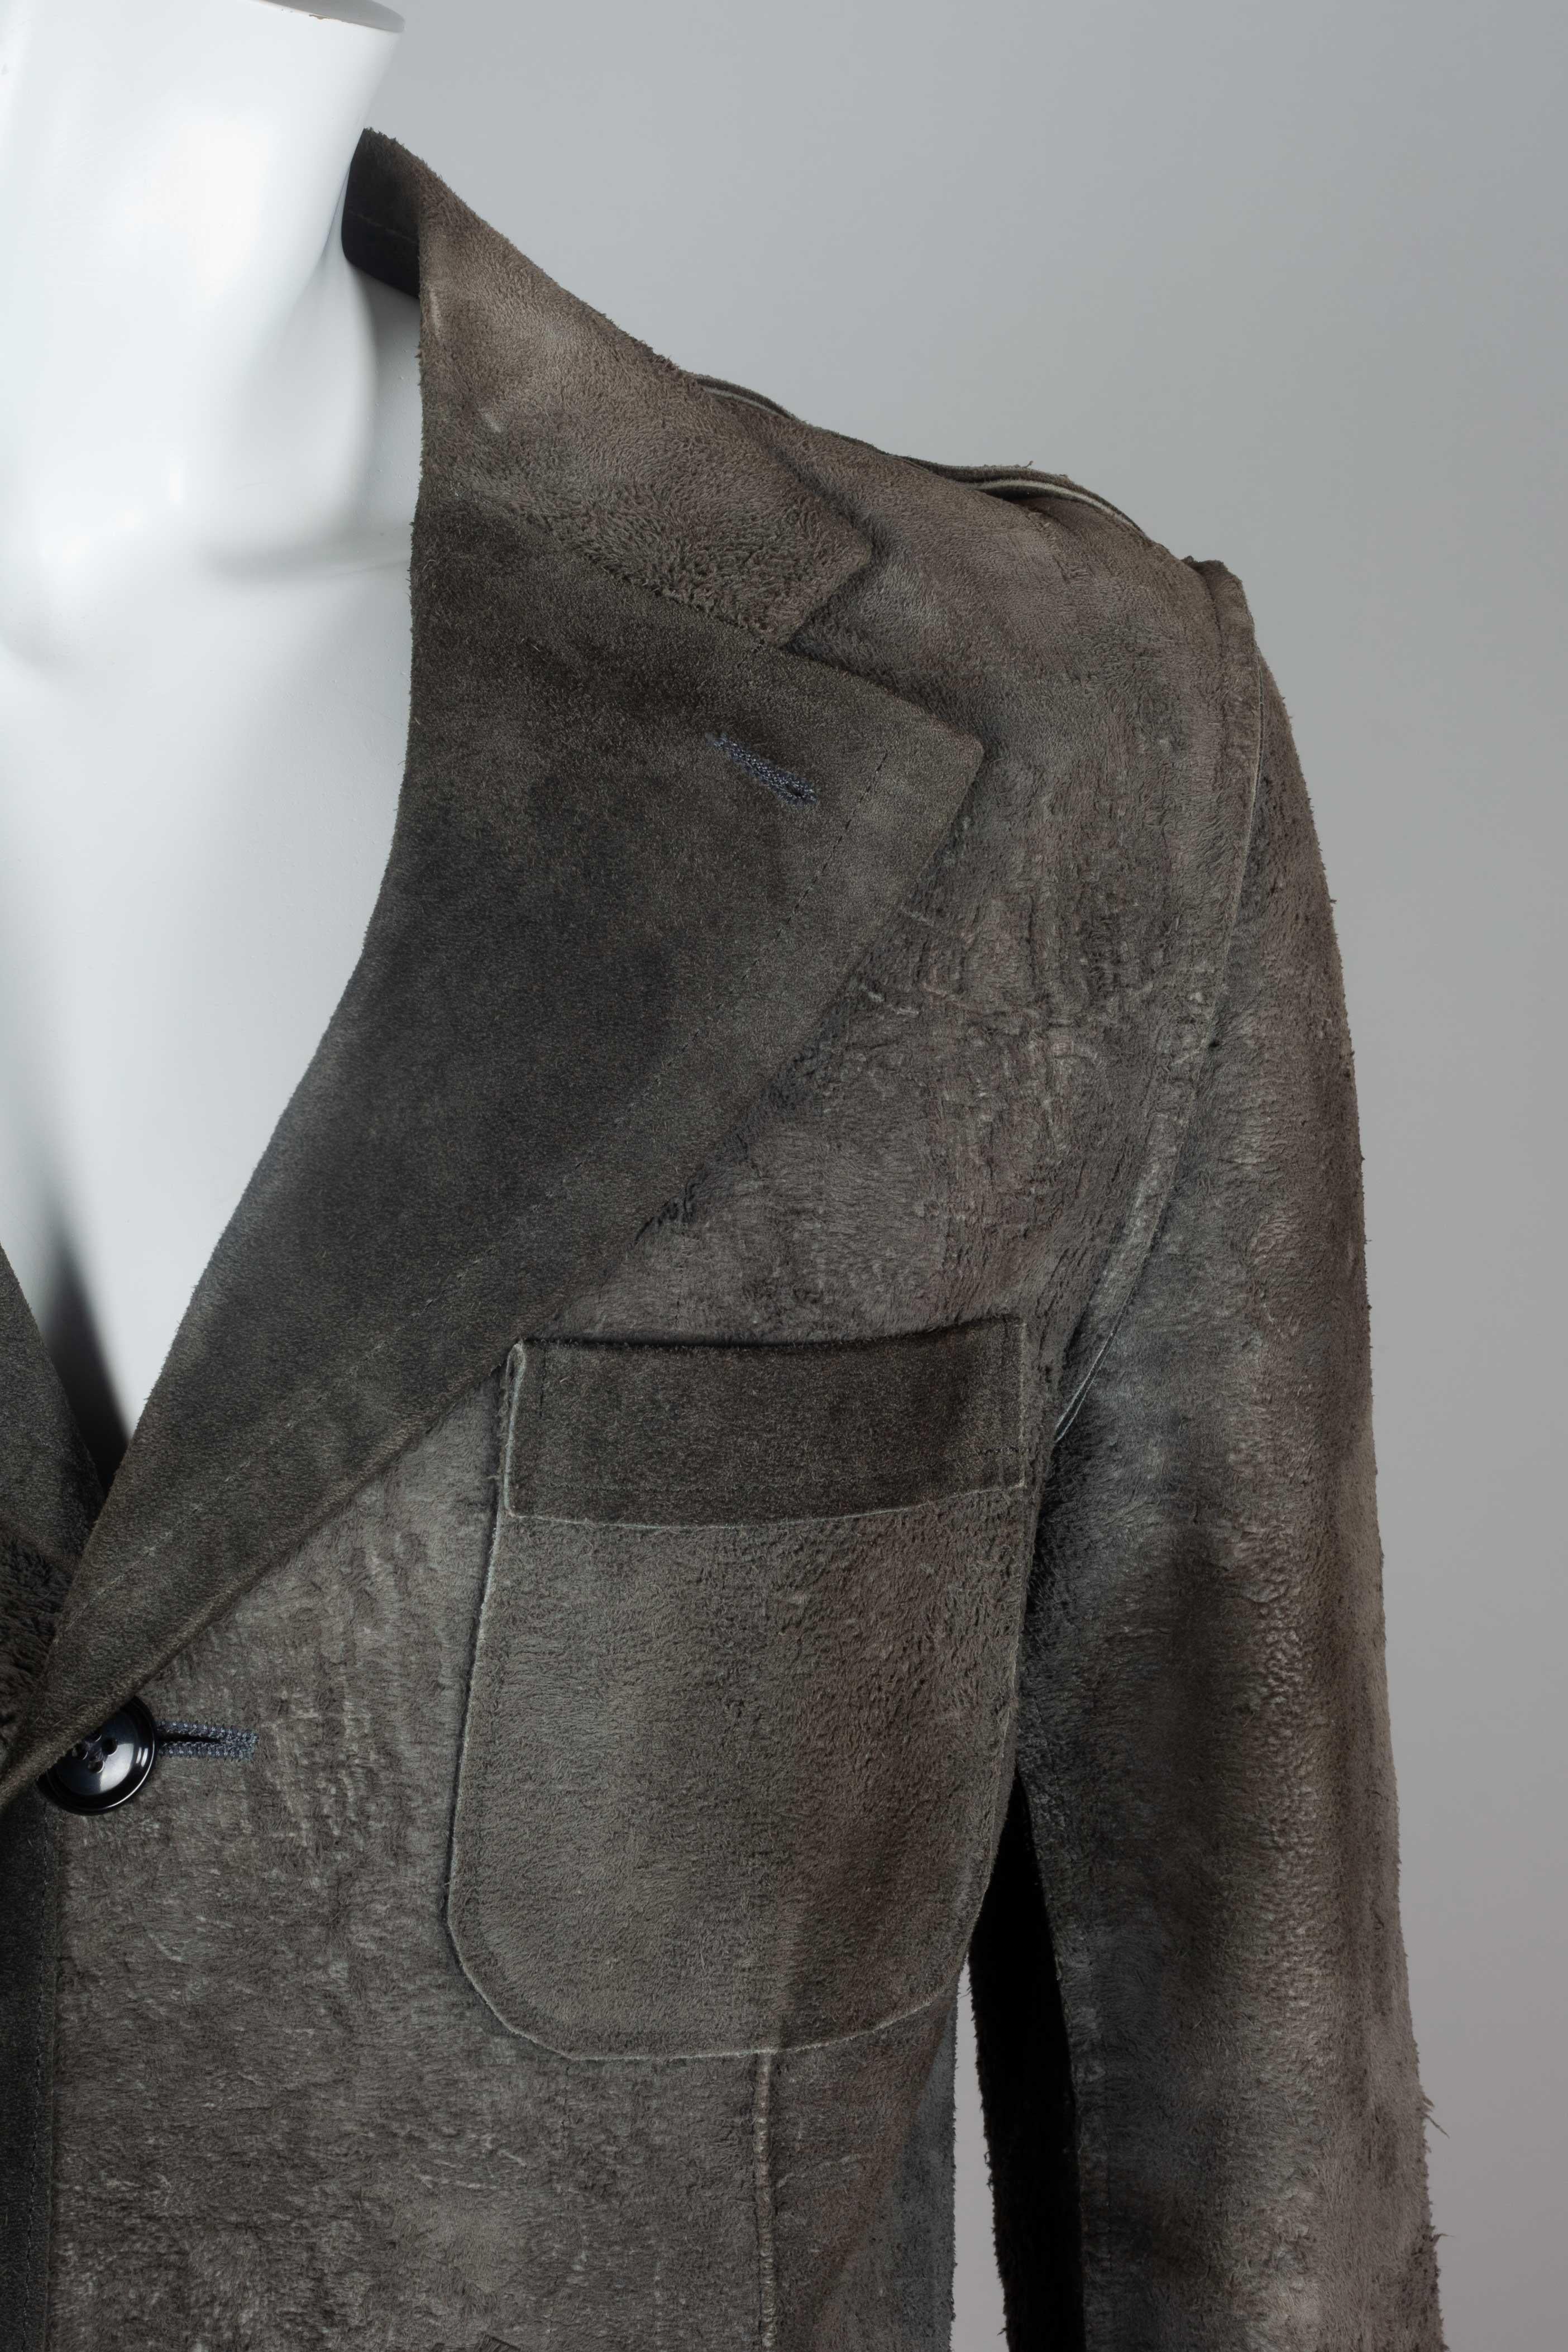 omme des Garçons Distressed Leather Single-Breasted Jacket, 2002 9